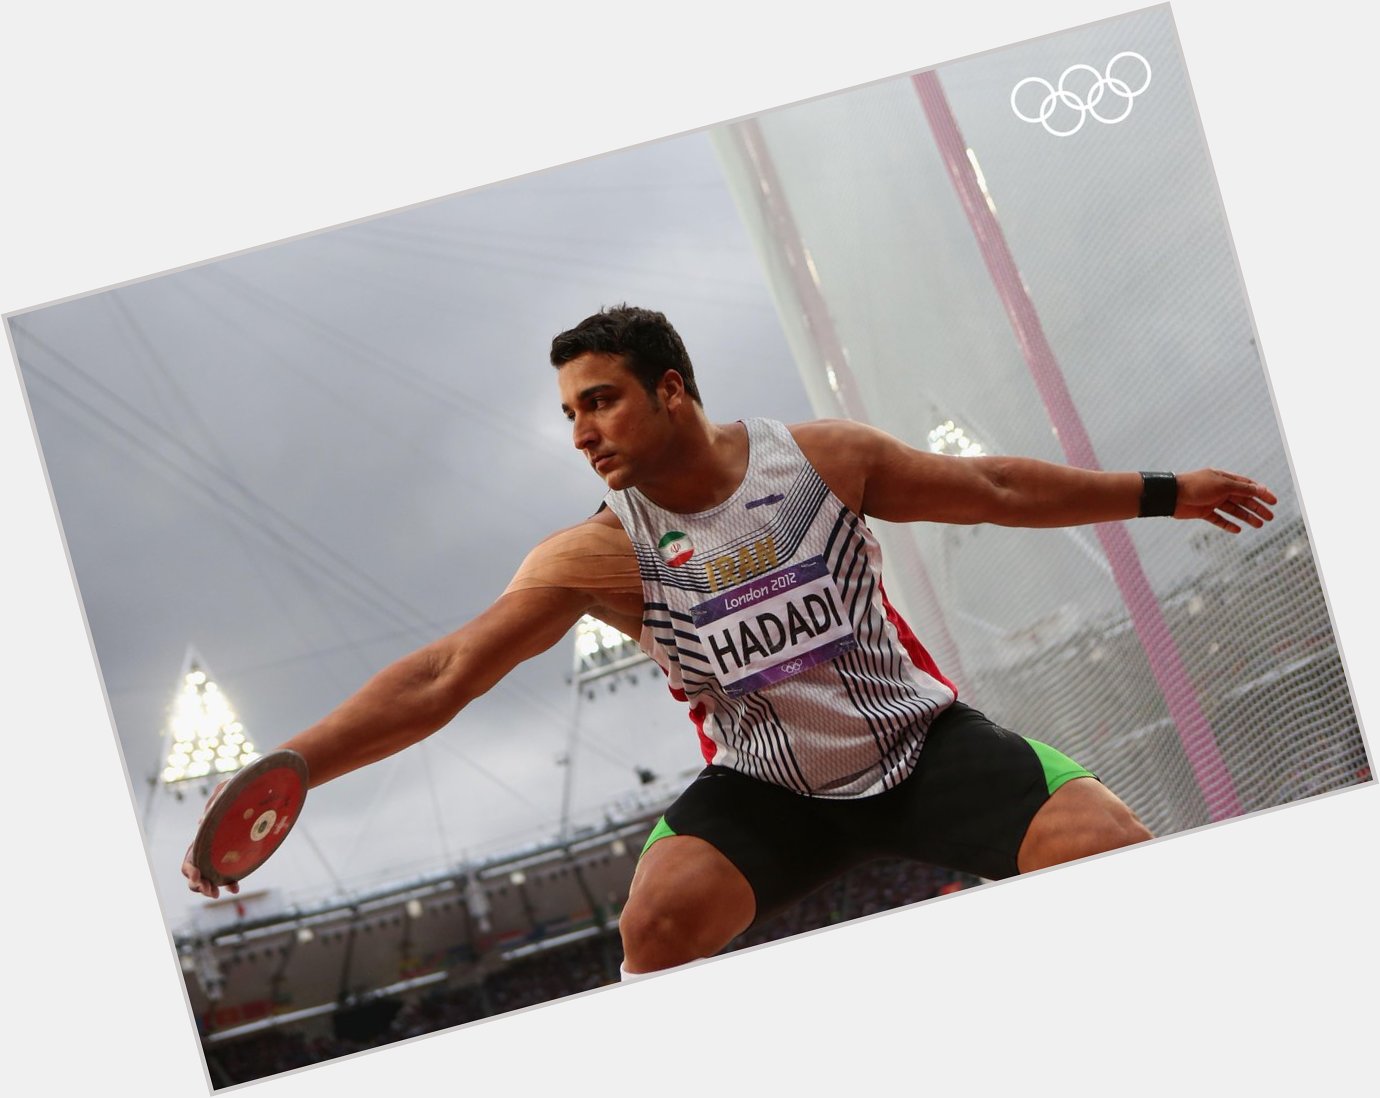 A very Happy Birthday to London 2012 silver medallist Ehsan Haddadi!   